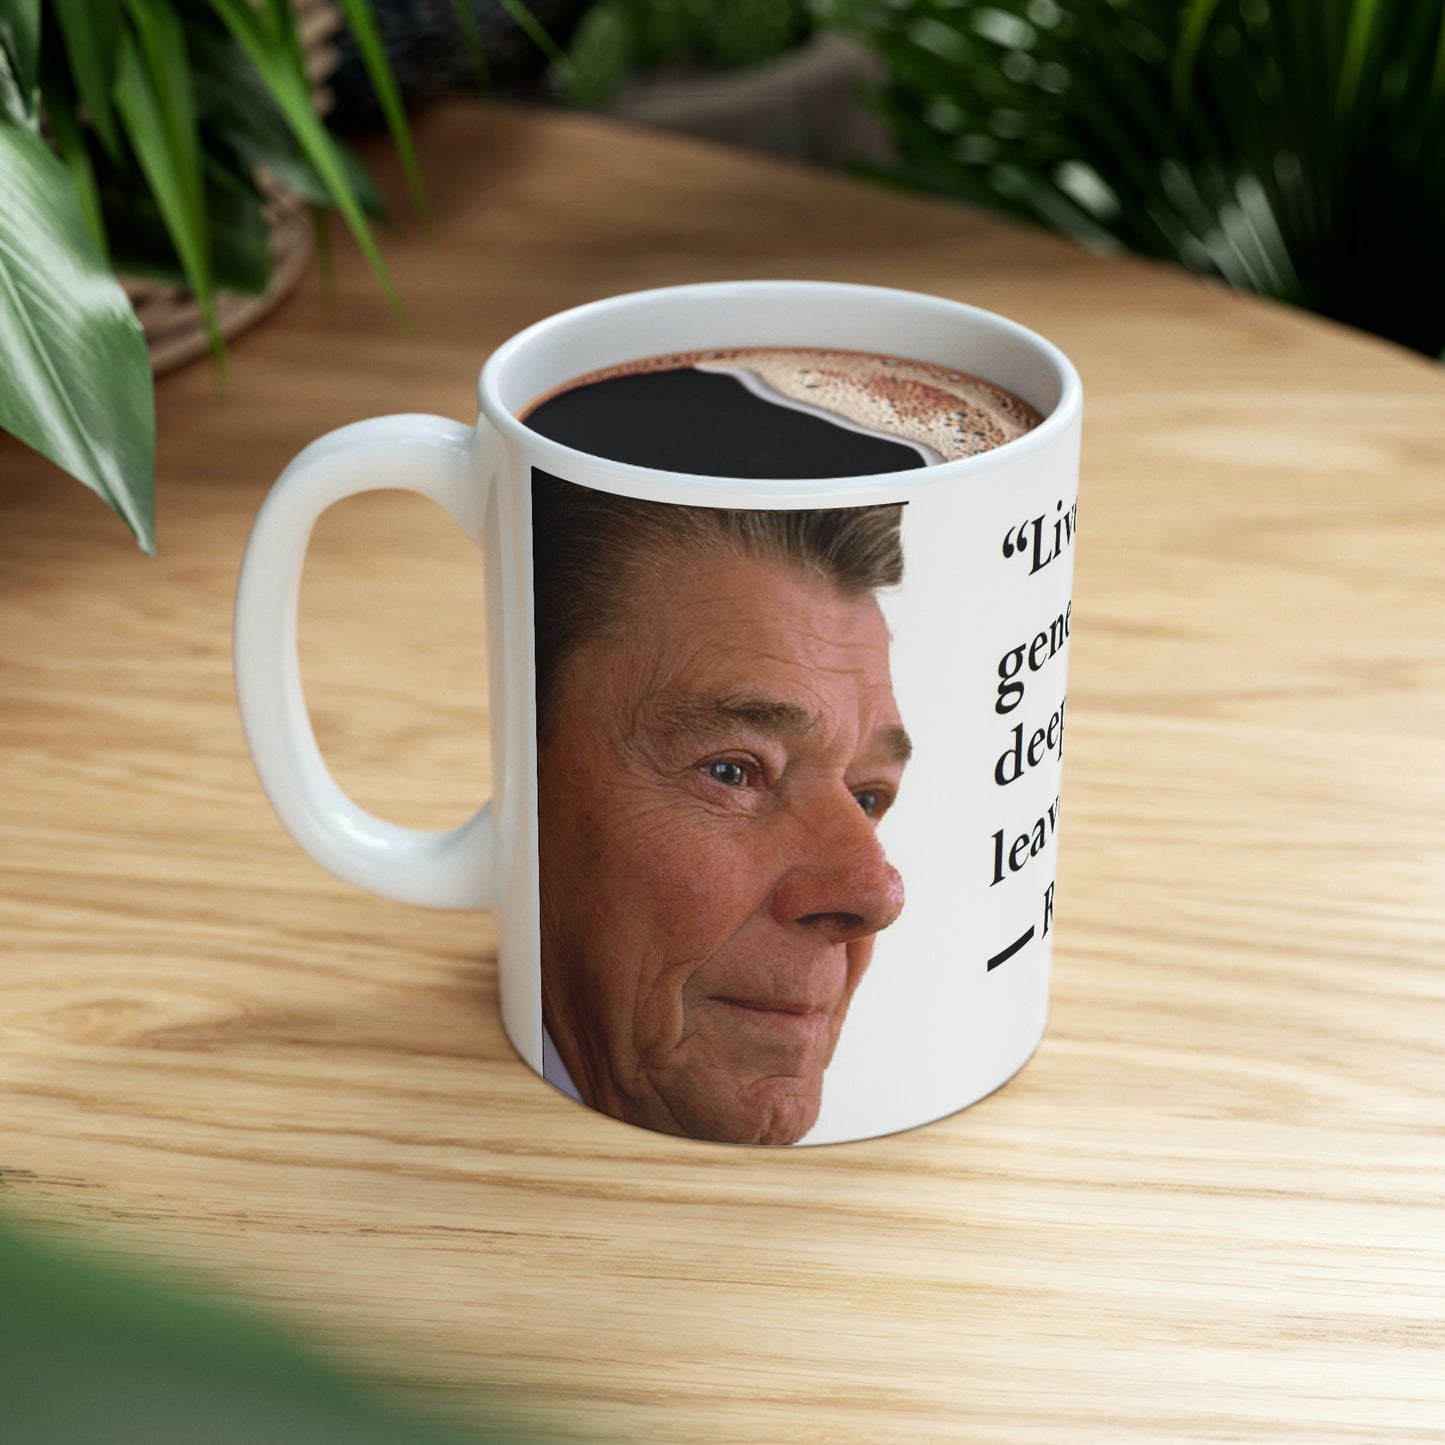 Ronald Reagan Collection Live simply, love generously Ceramic Mug 11oz